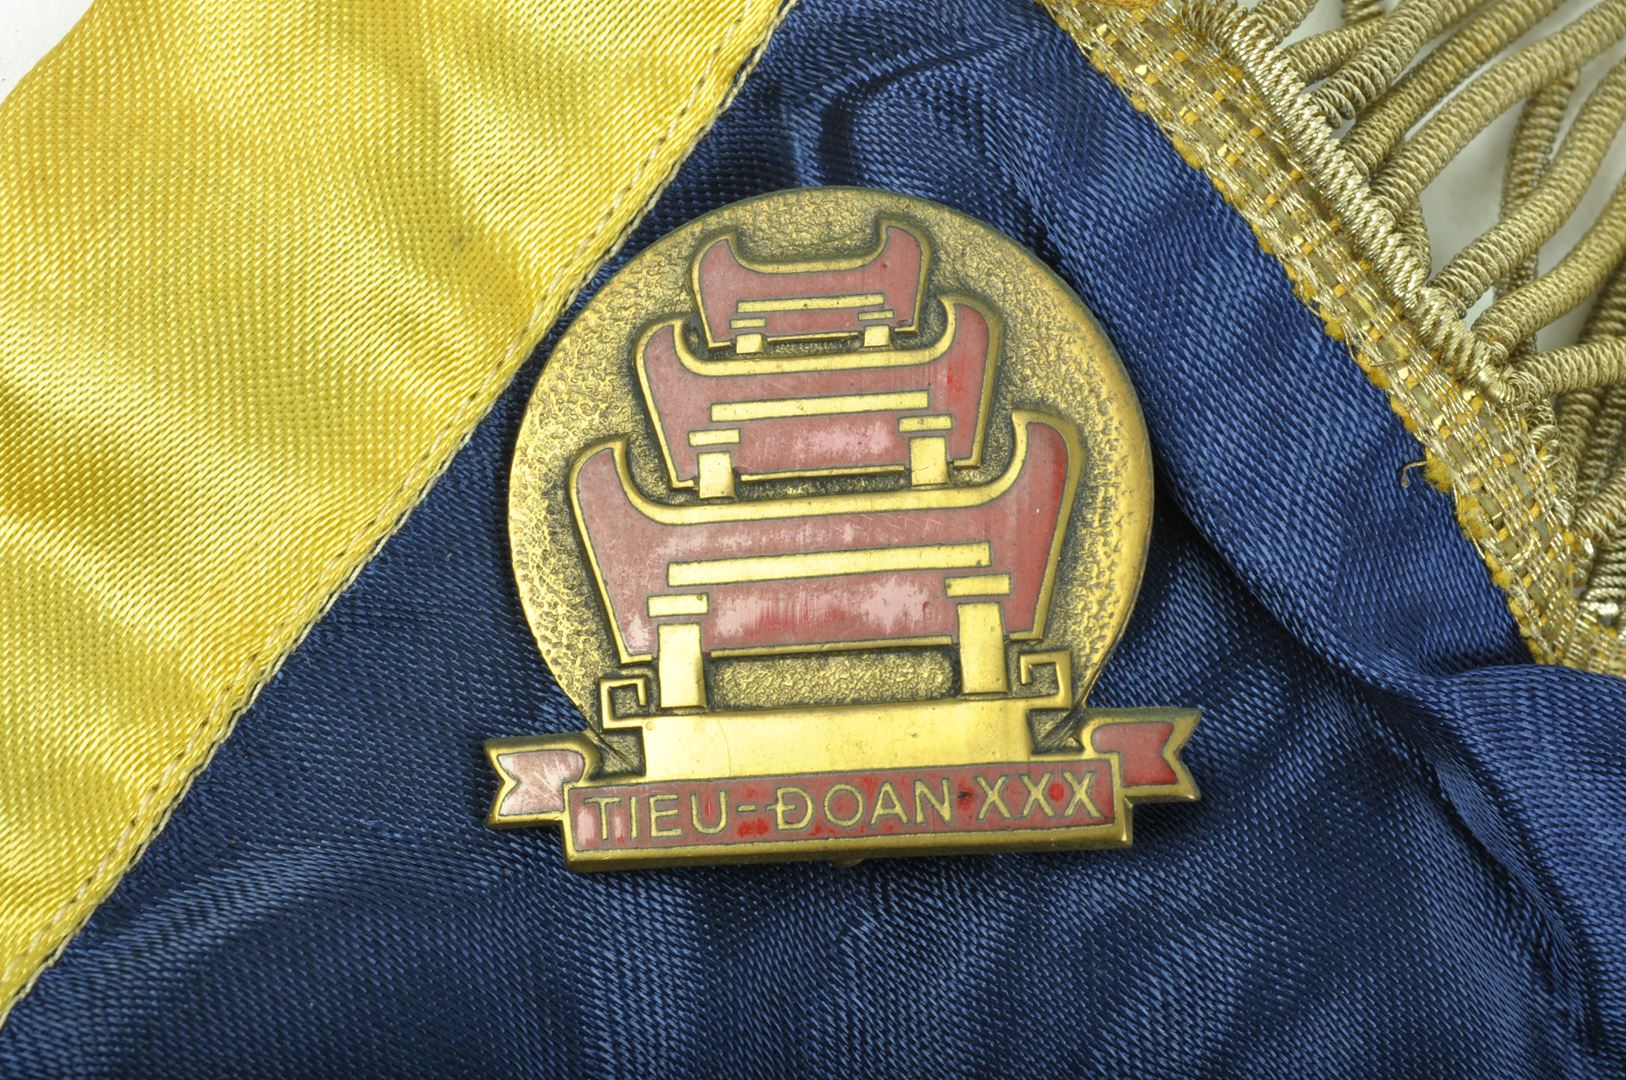 Fanion 30ième Bataillon Tieu Doan + Insigne